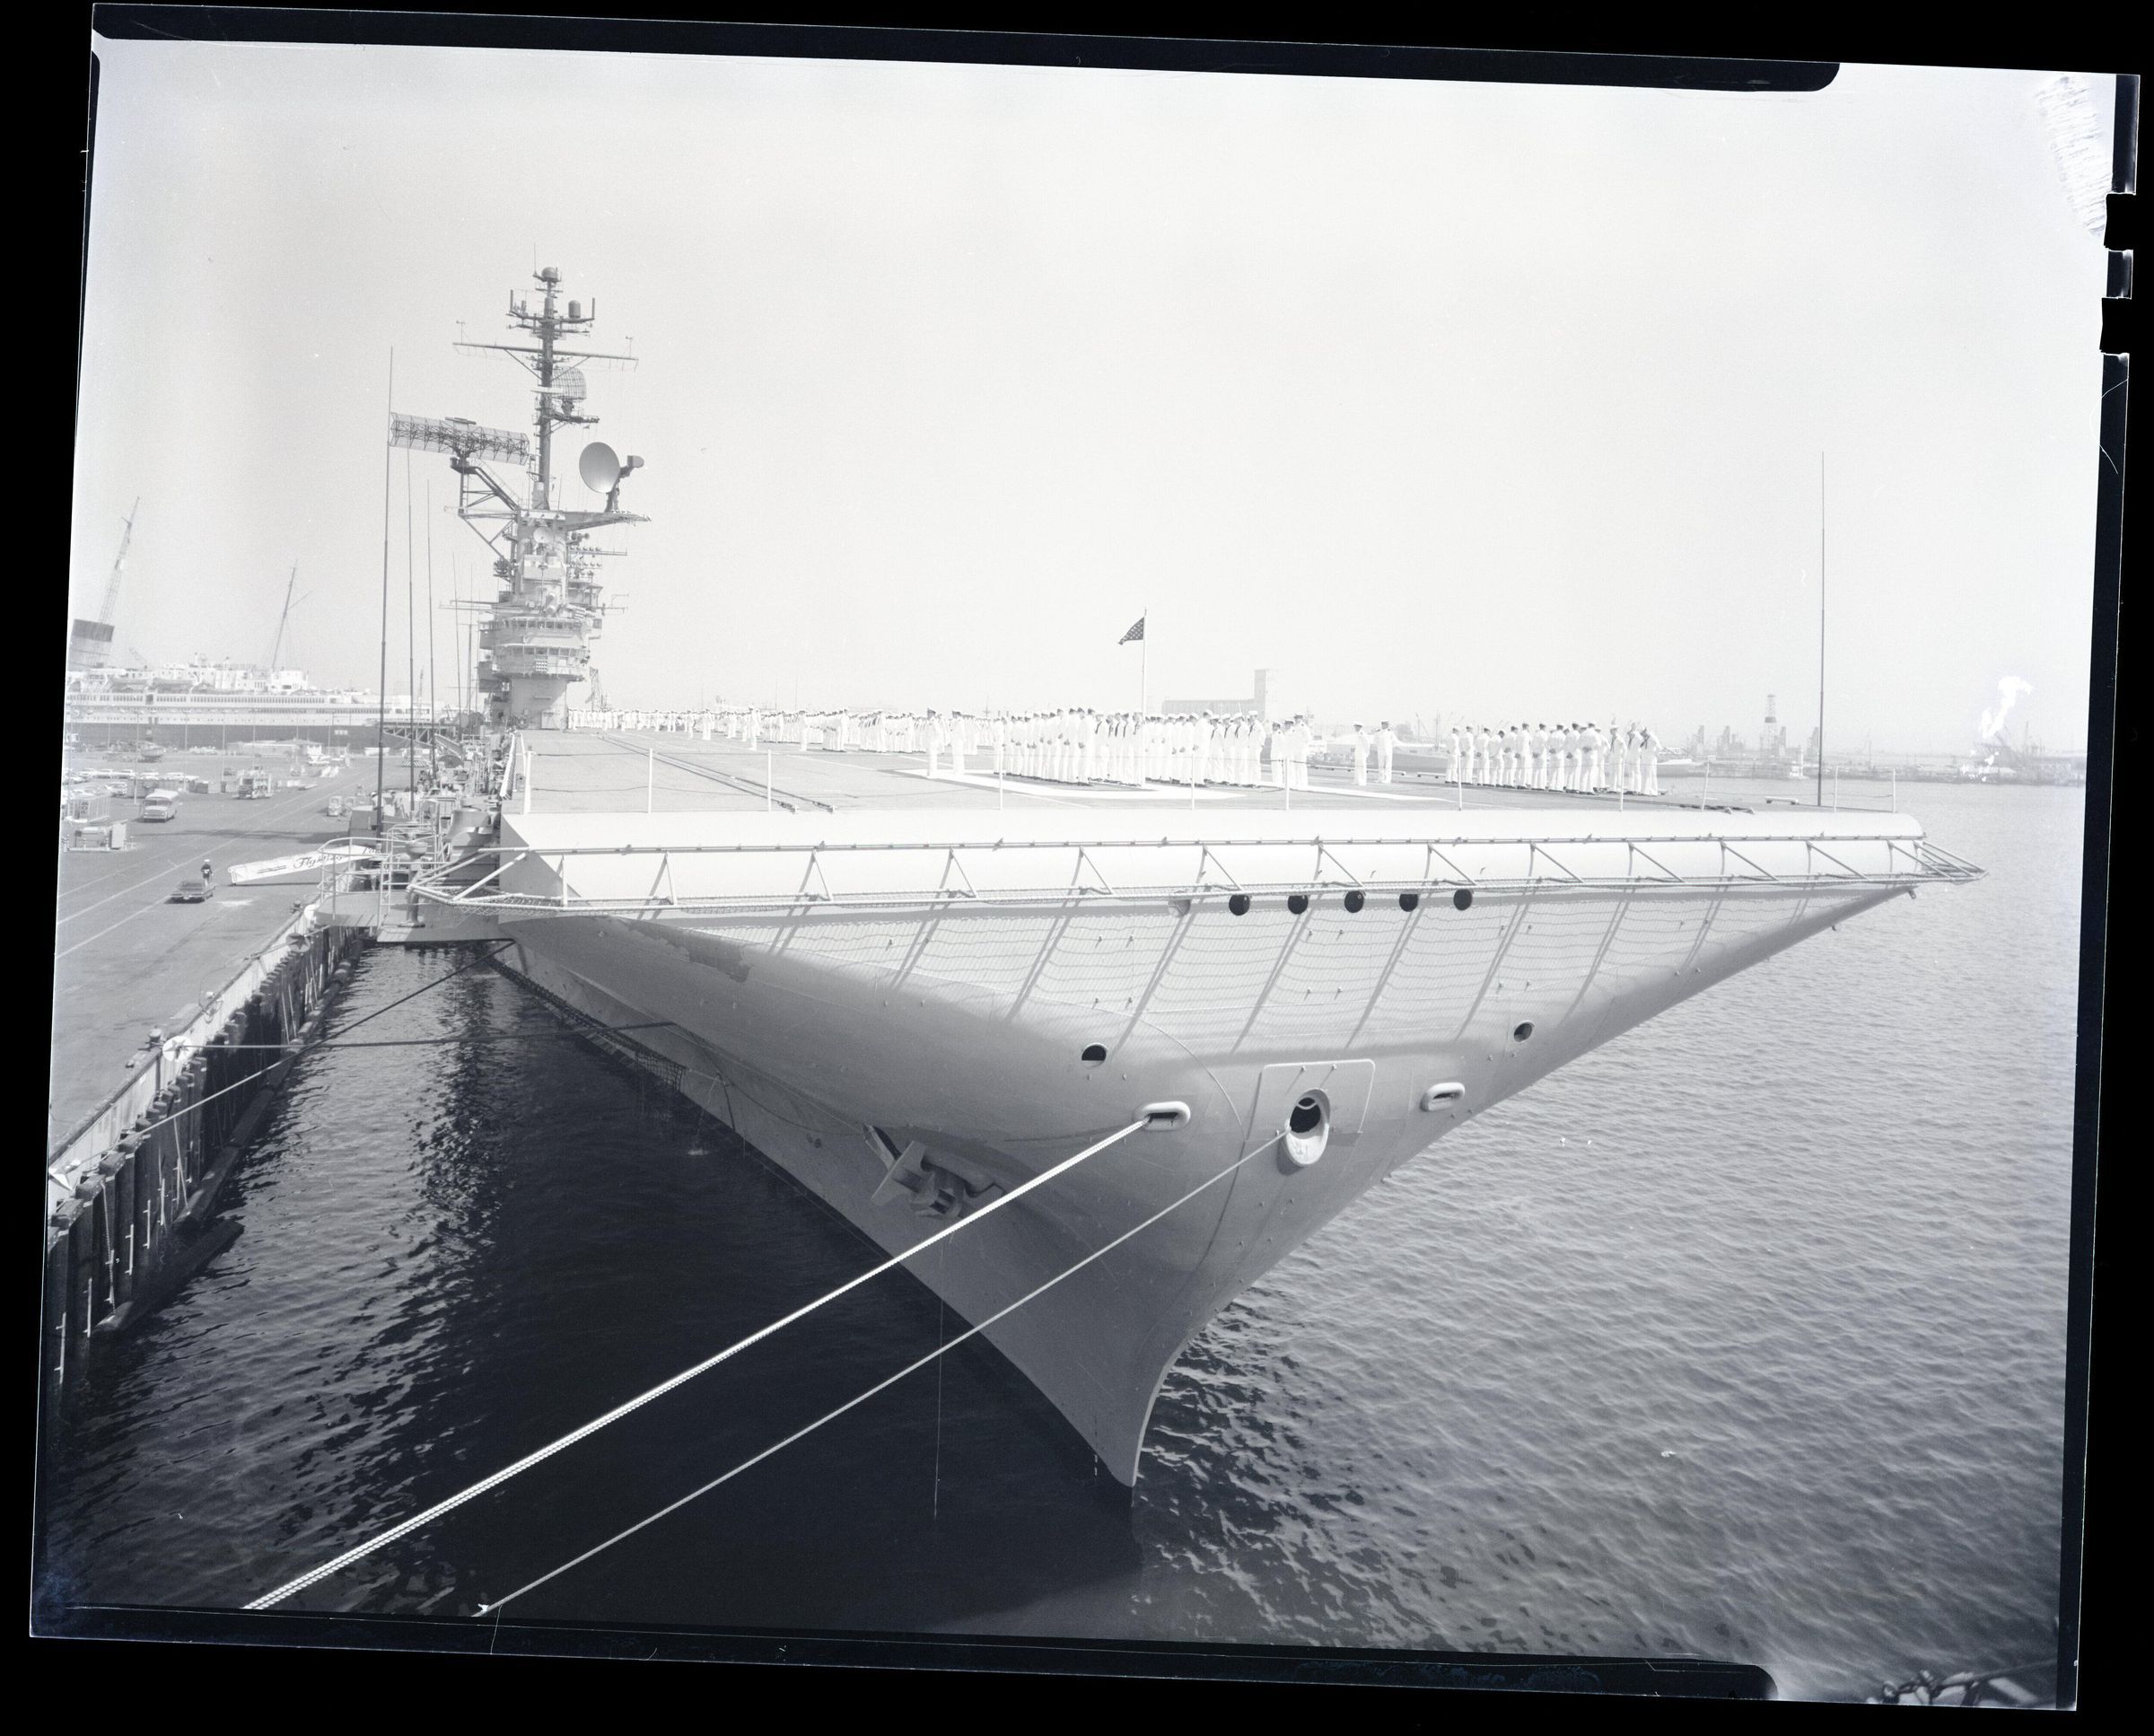 Primary Image of The USS Yorktown (CVS-10)